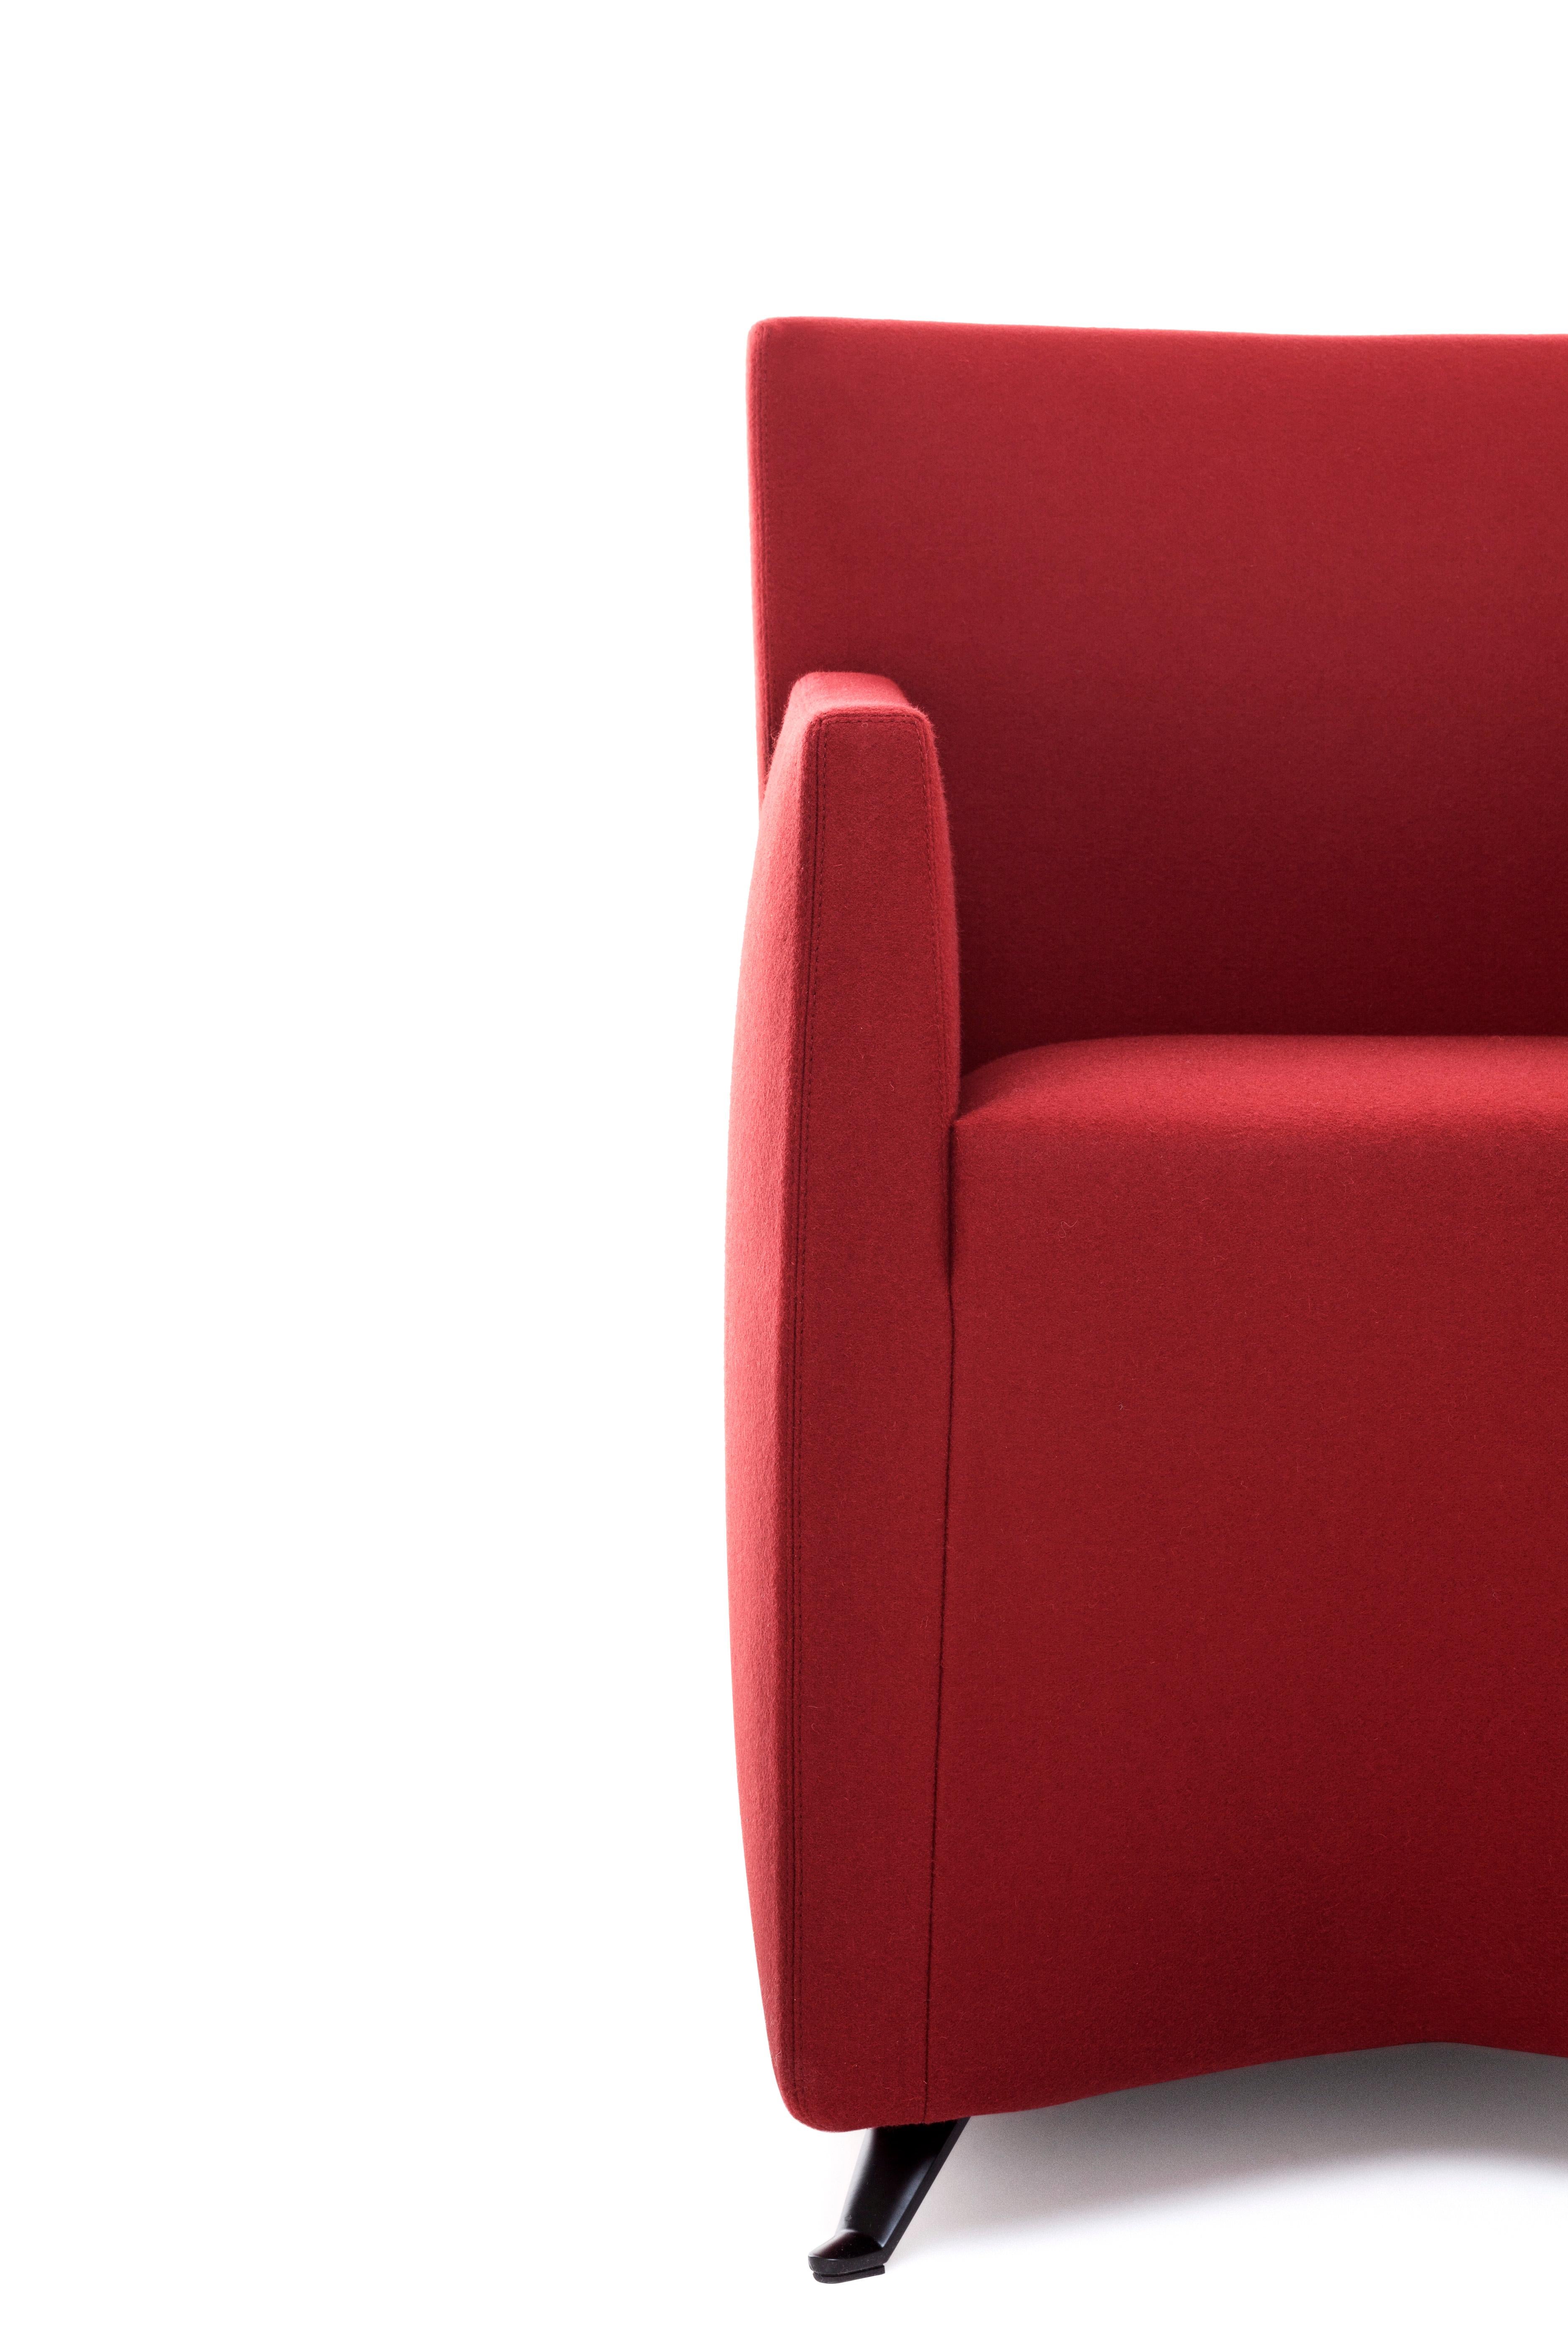 Modern  Baleri Italia Caprichair Armchair in Red Fabric by Hannes Wettstein For Sale